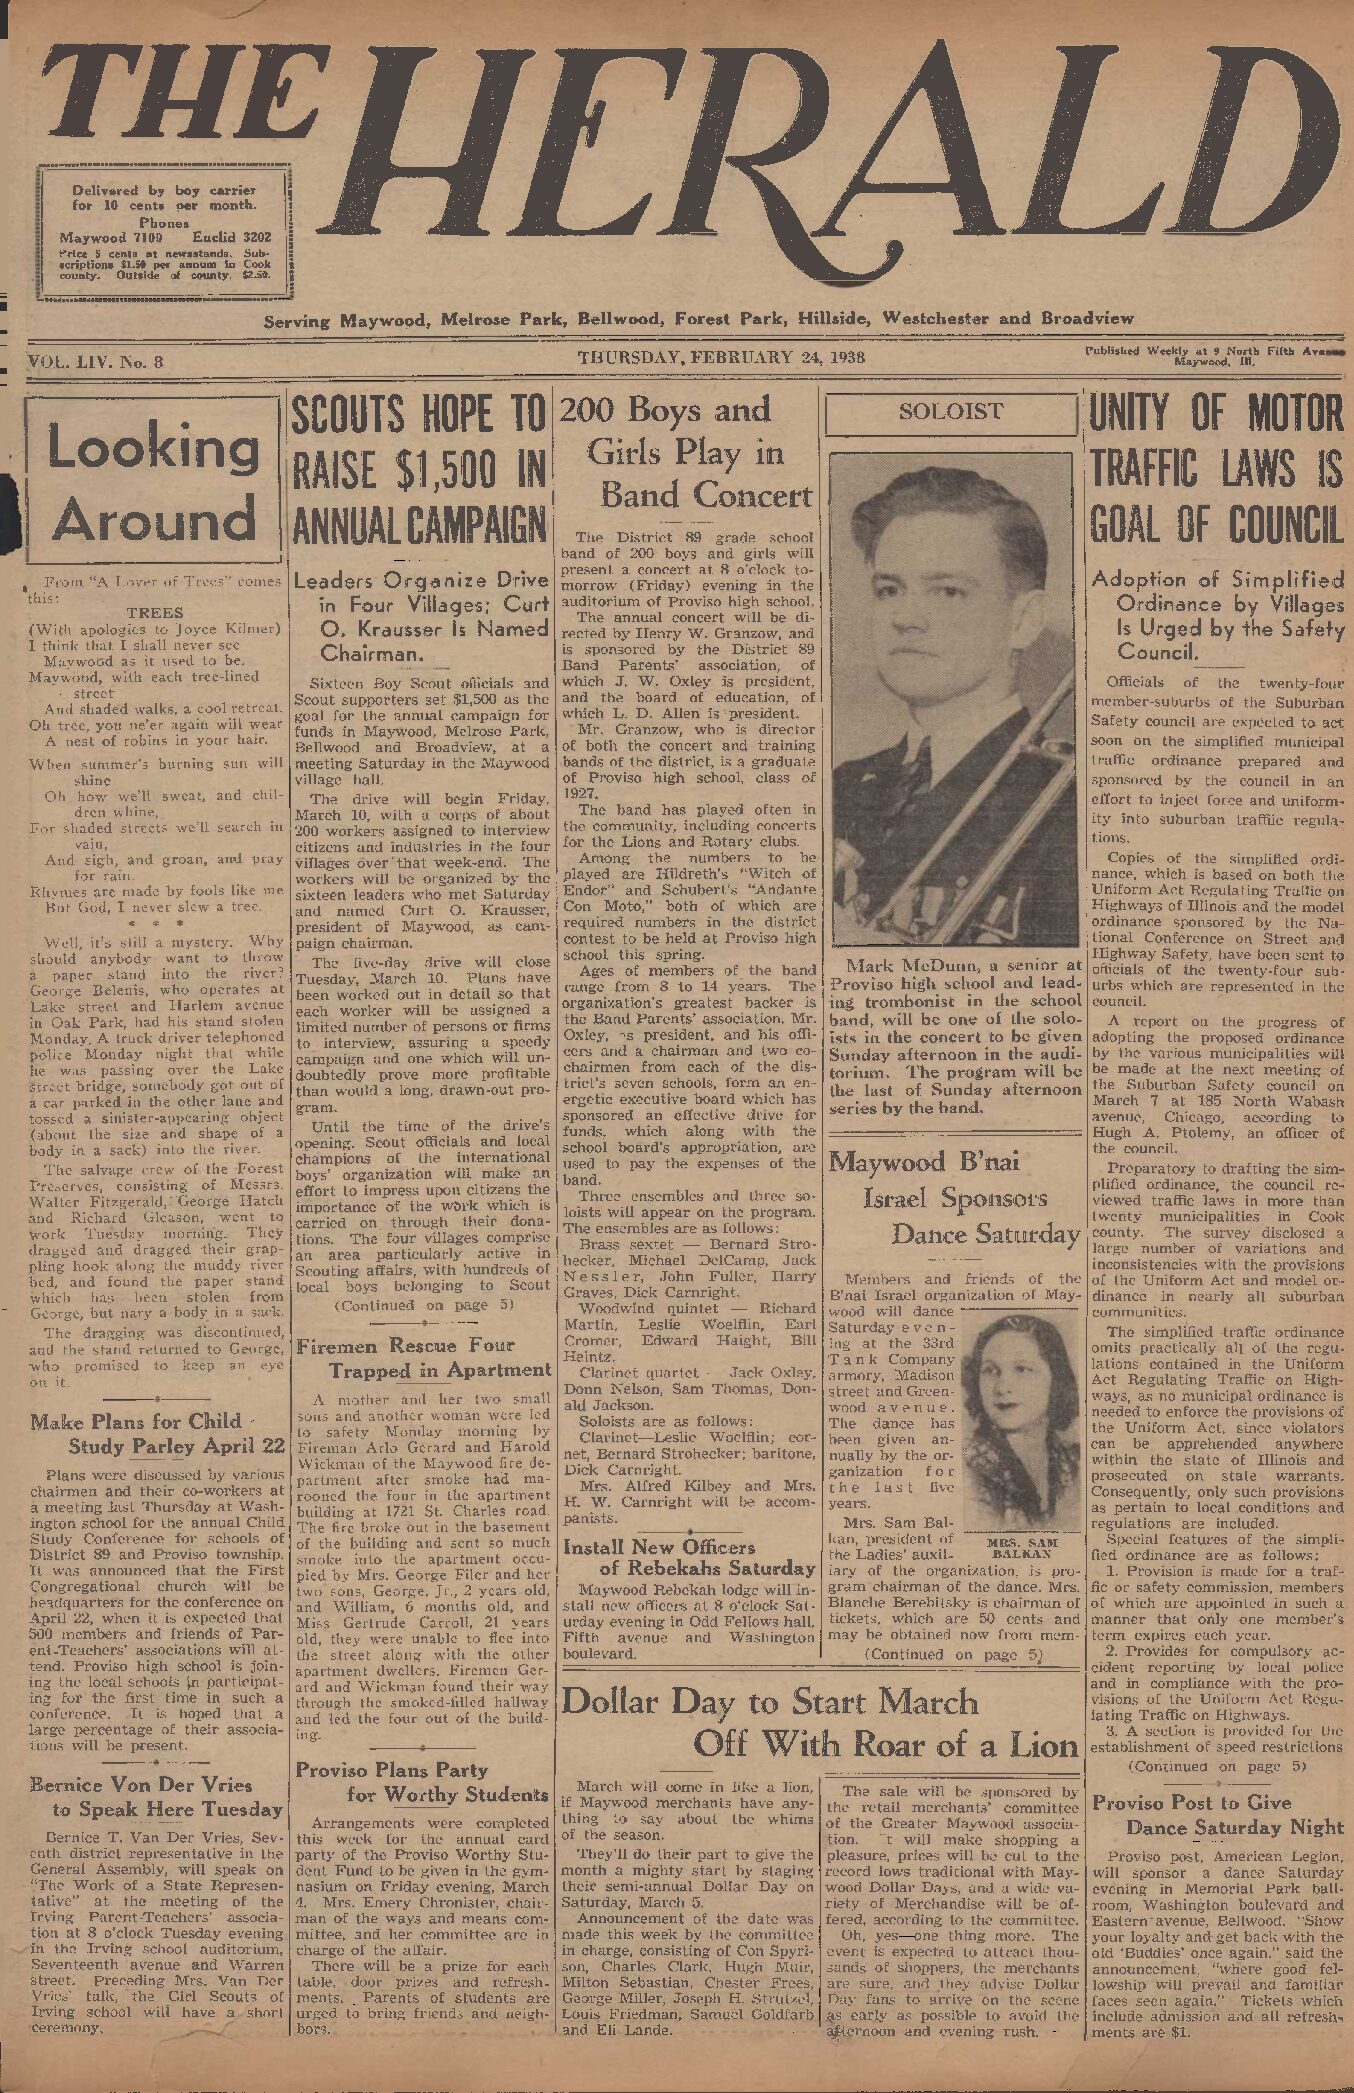 The Herald – 19380224